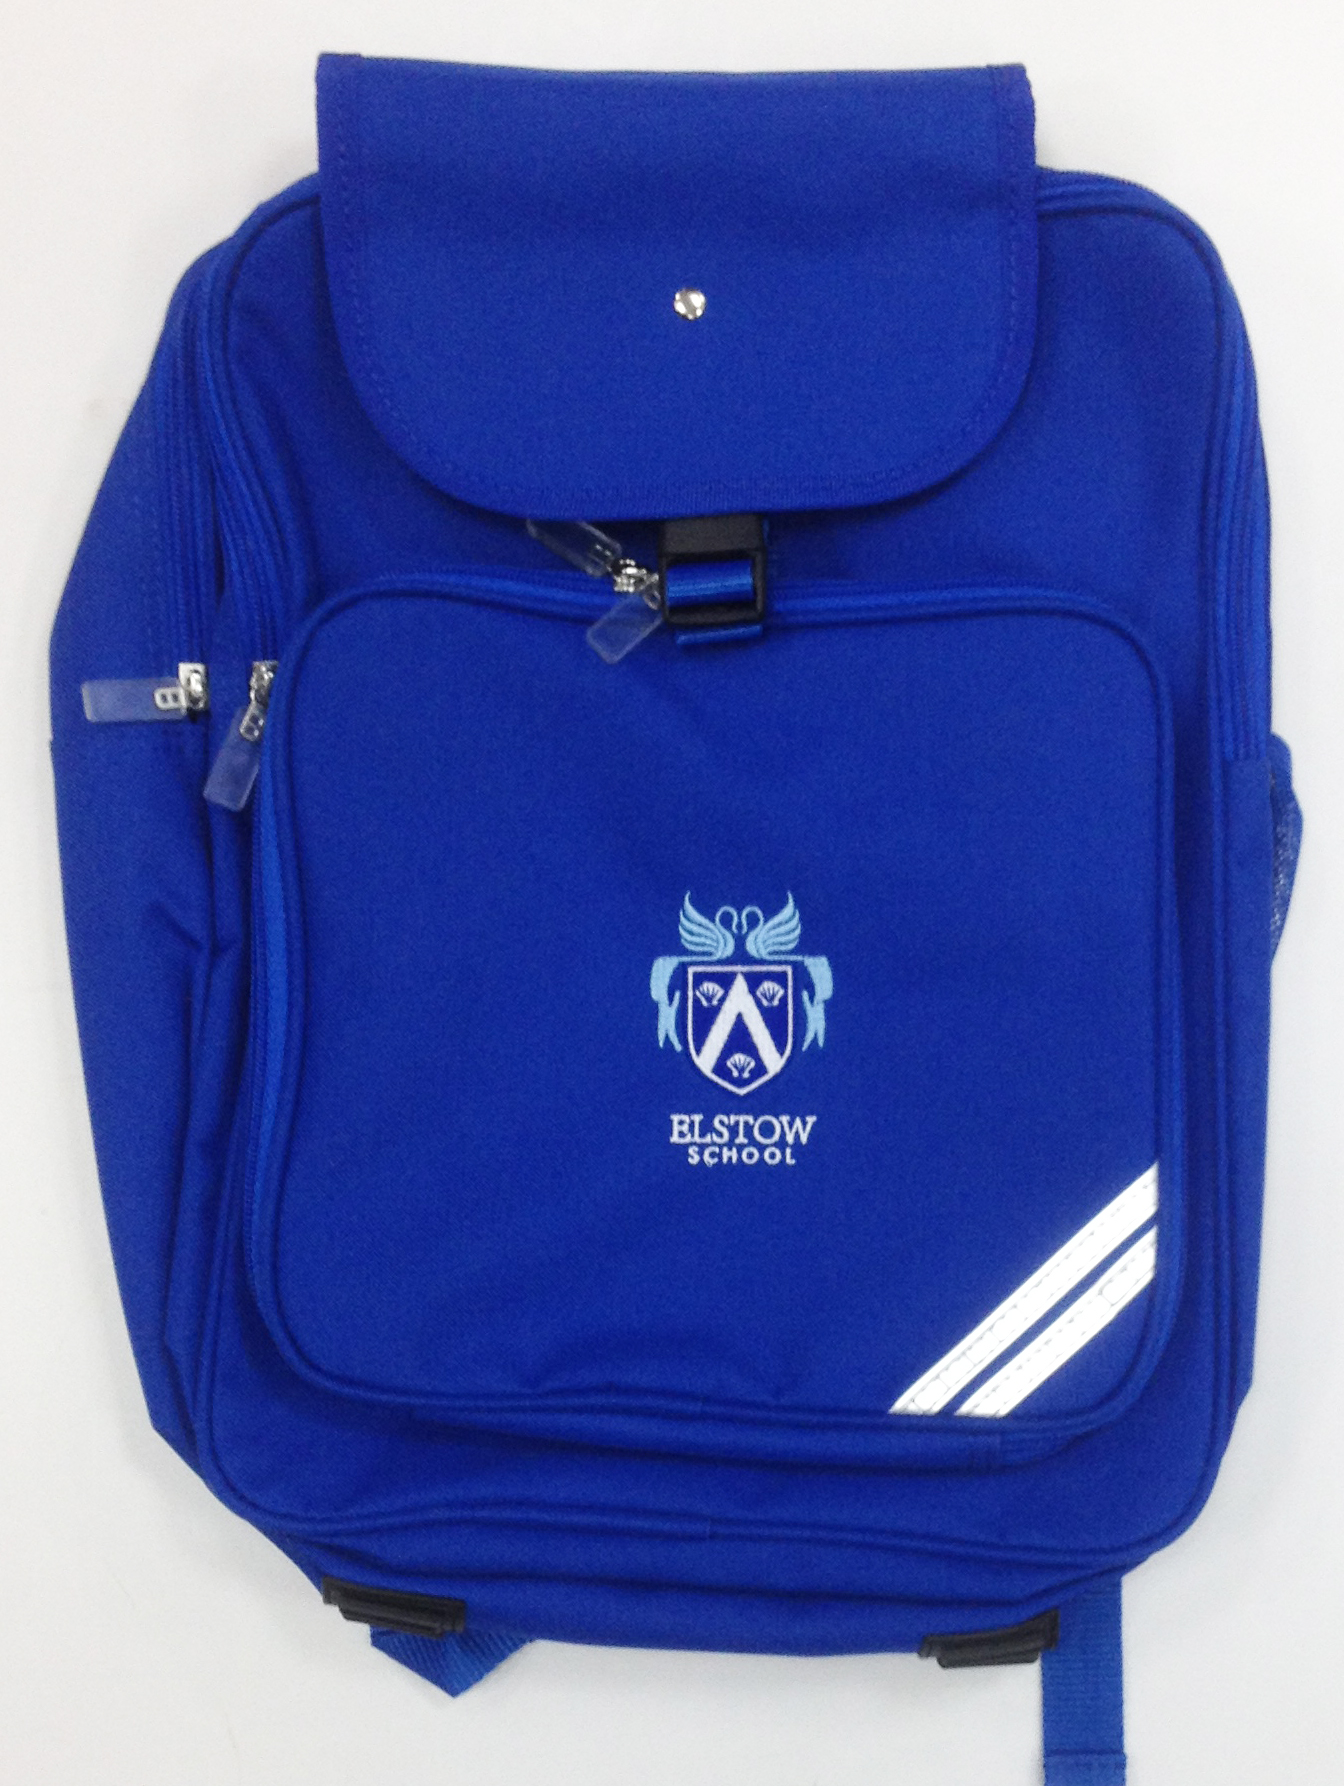 Elstow School Junior Backpack With Mesh Pocket (Royal)